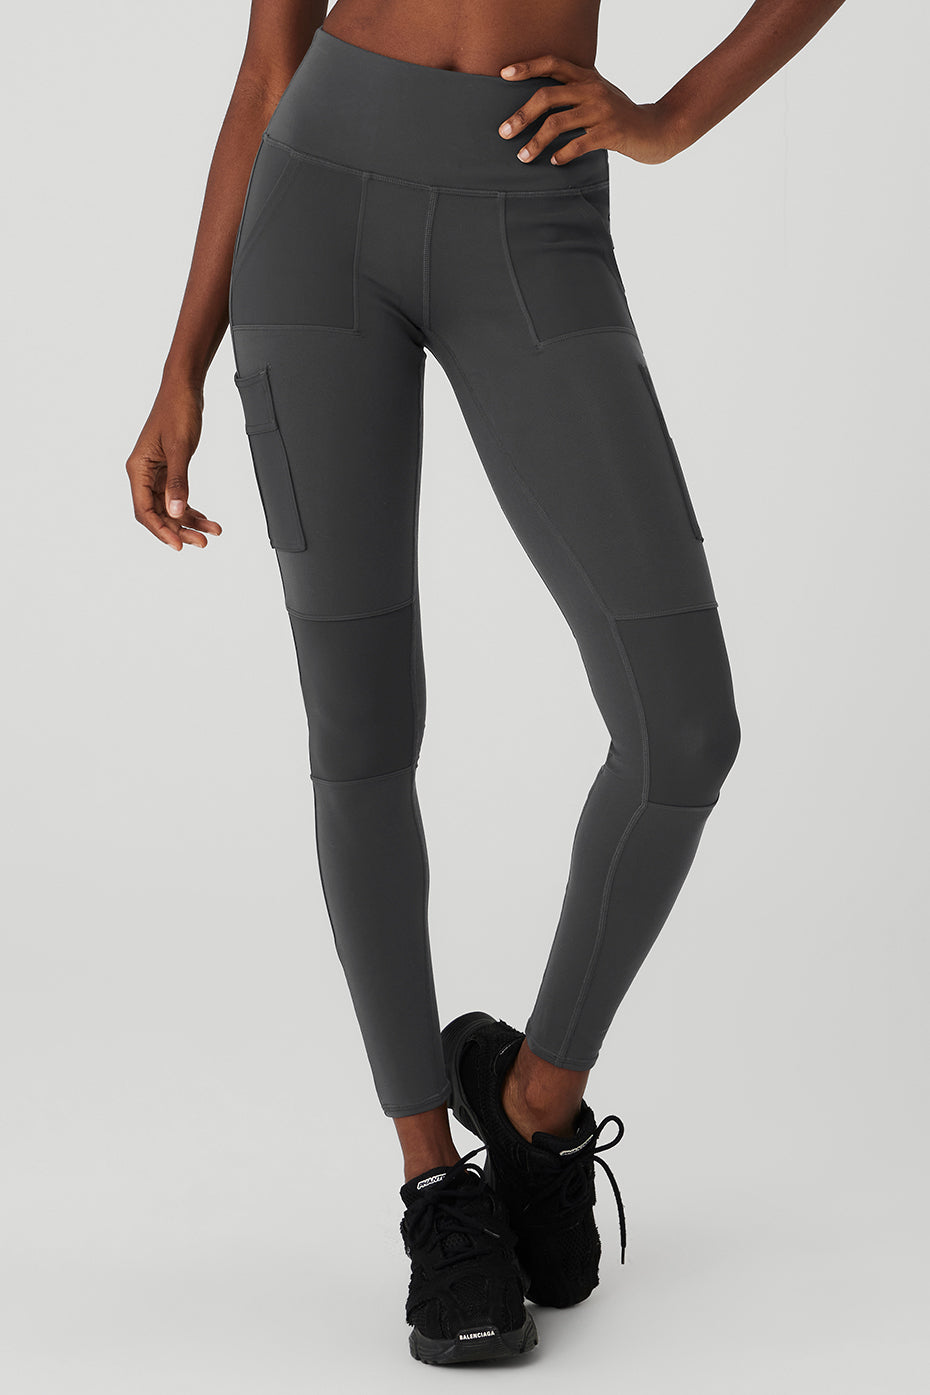  5 Pockets,Womens Straight Leg Yoga Pants Stretch Work Dress Pants  Slim Fit,33,Graphite Grey,Size XS